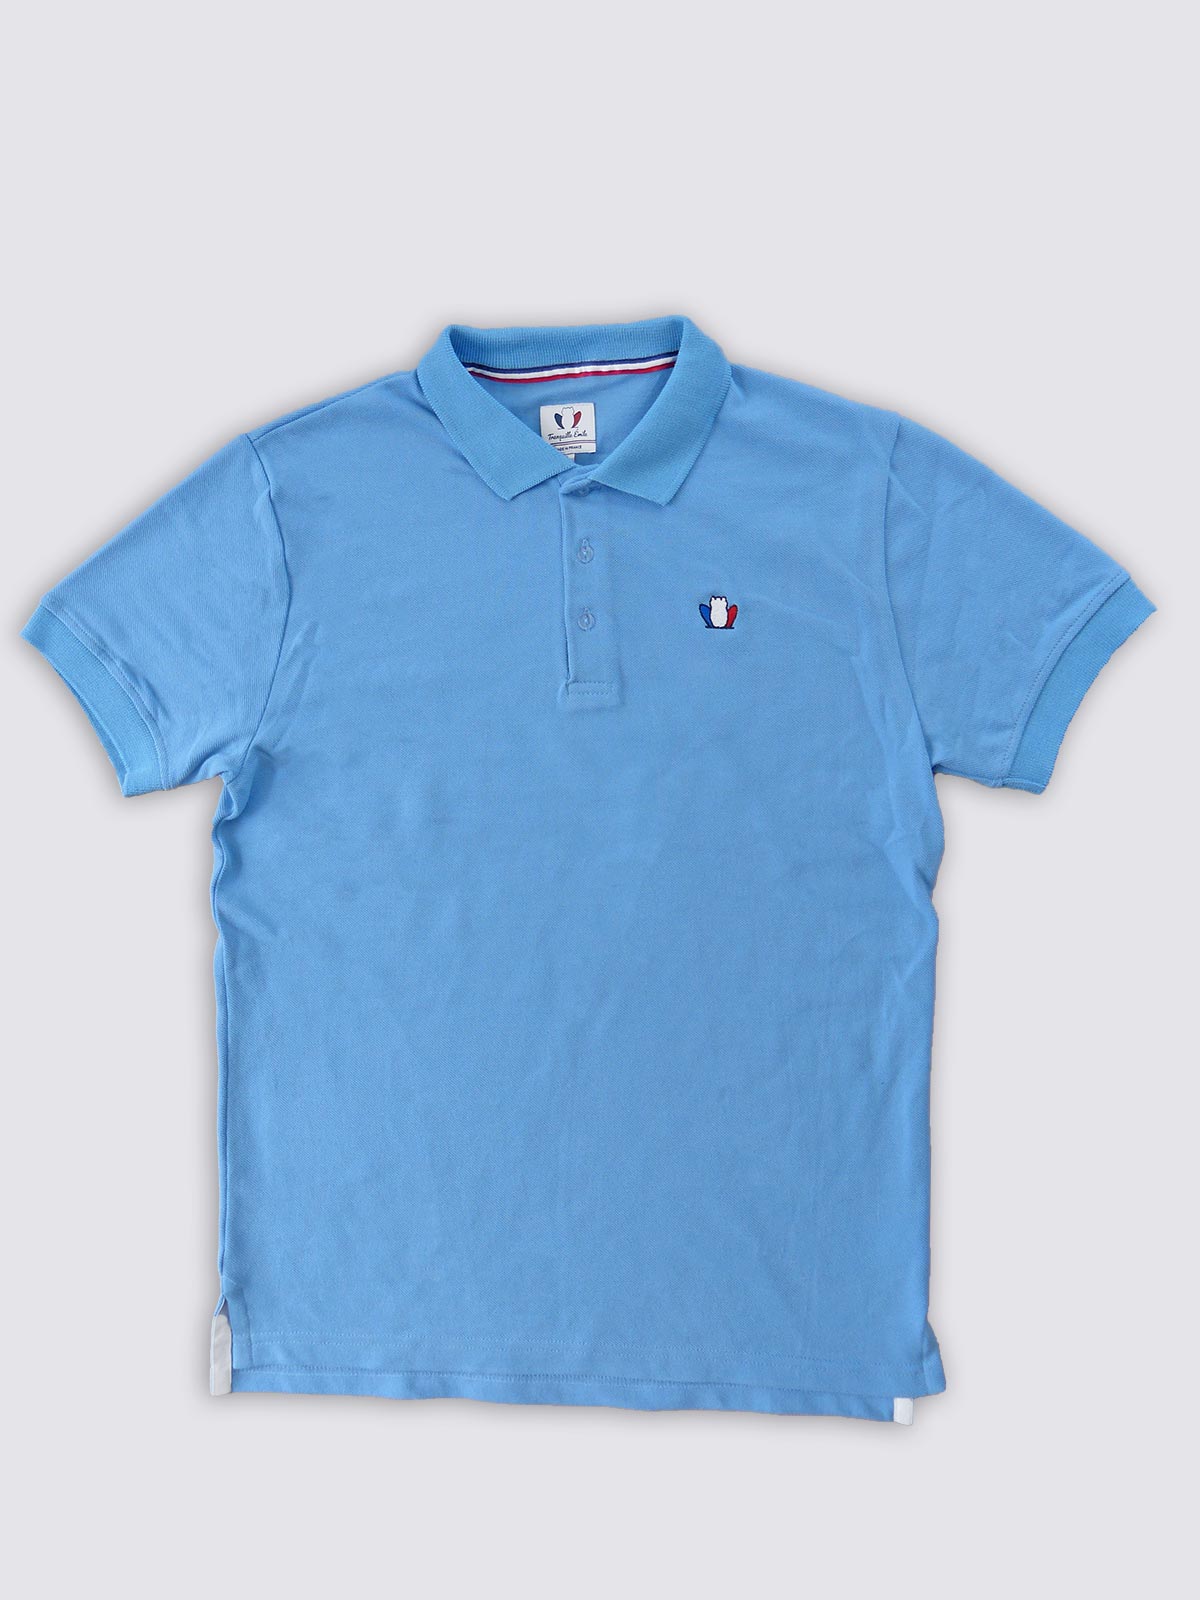 Polo made in France homme bleu - L'Elégant 3.0 - Tranquille Emile